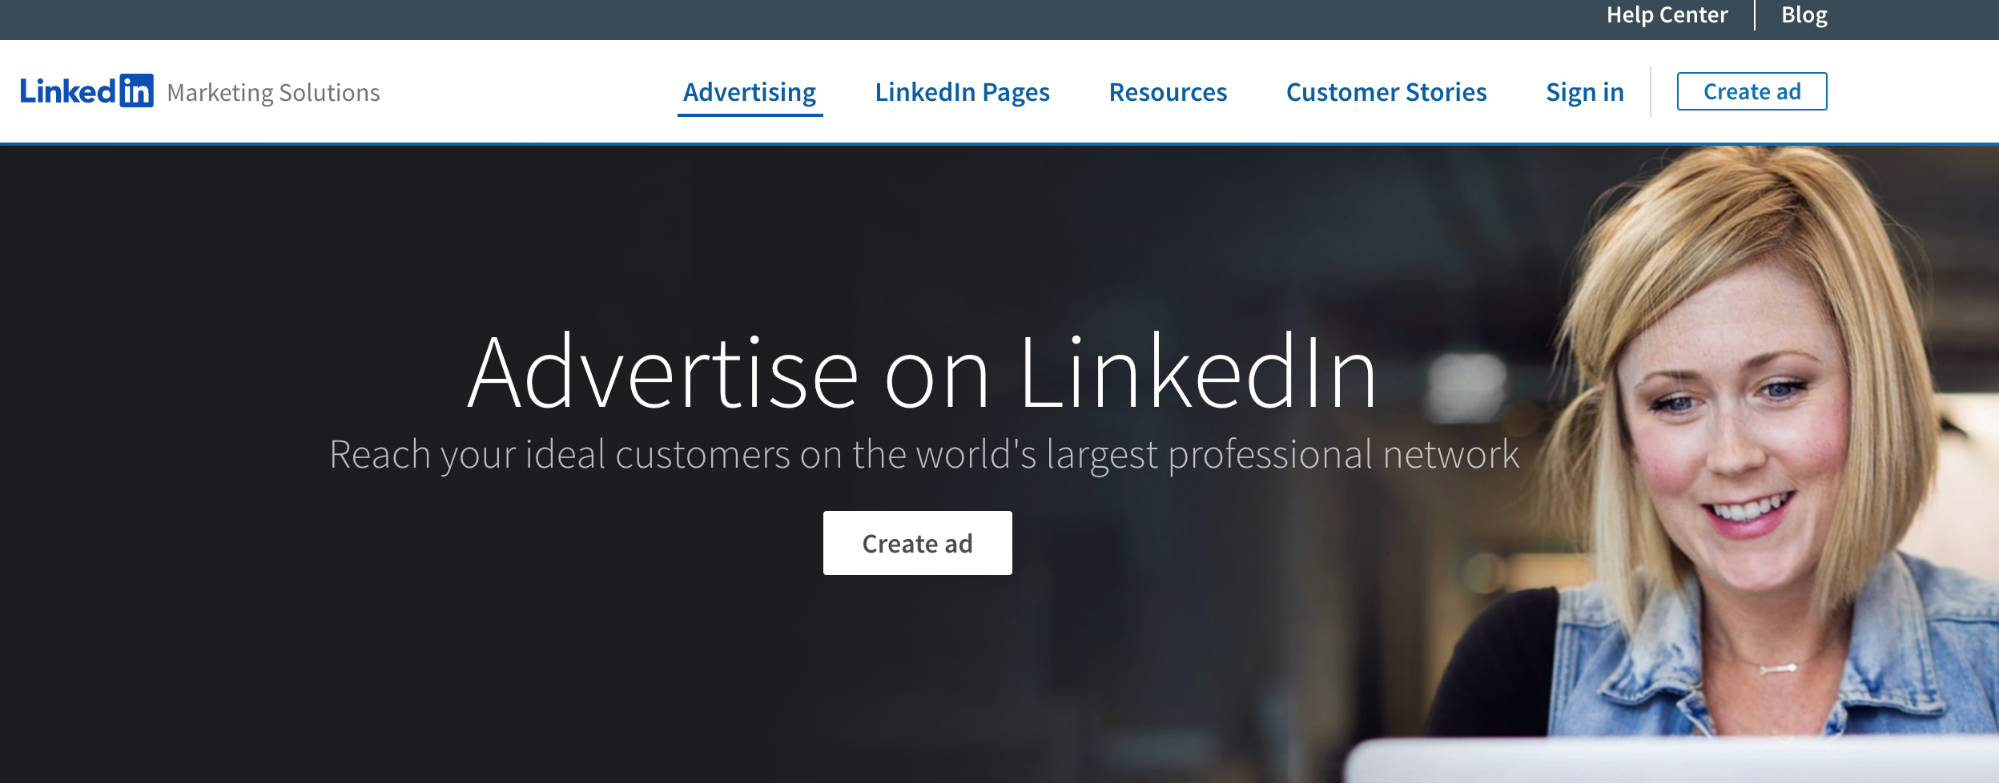 Launching ads on LinkedIn